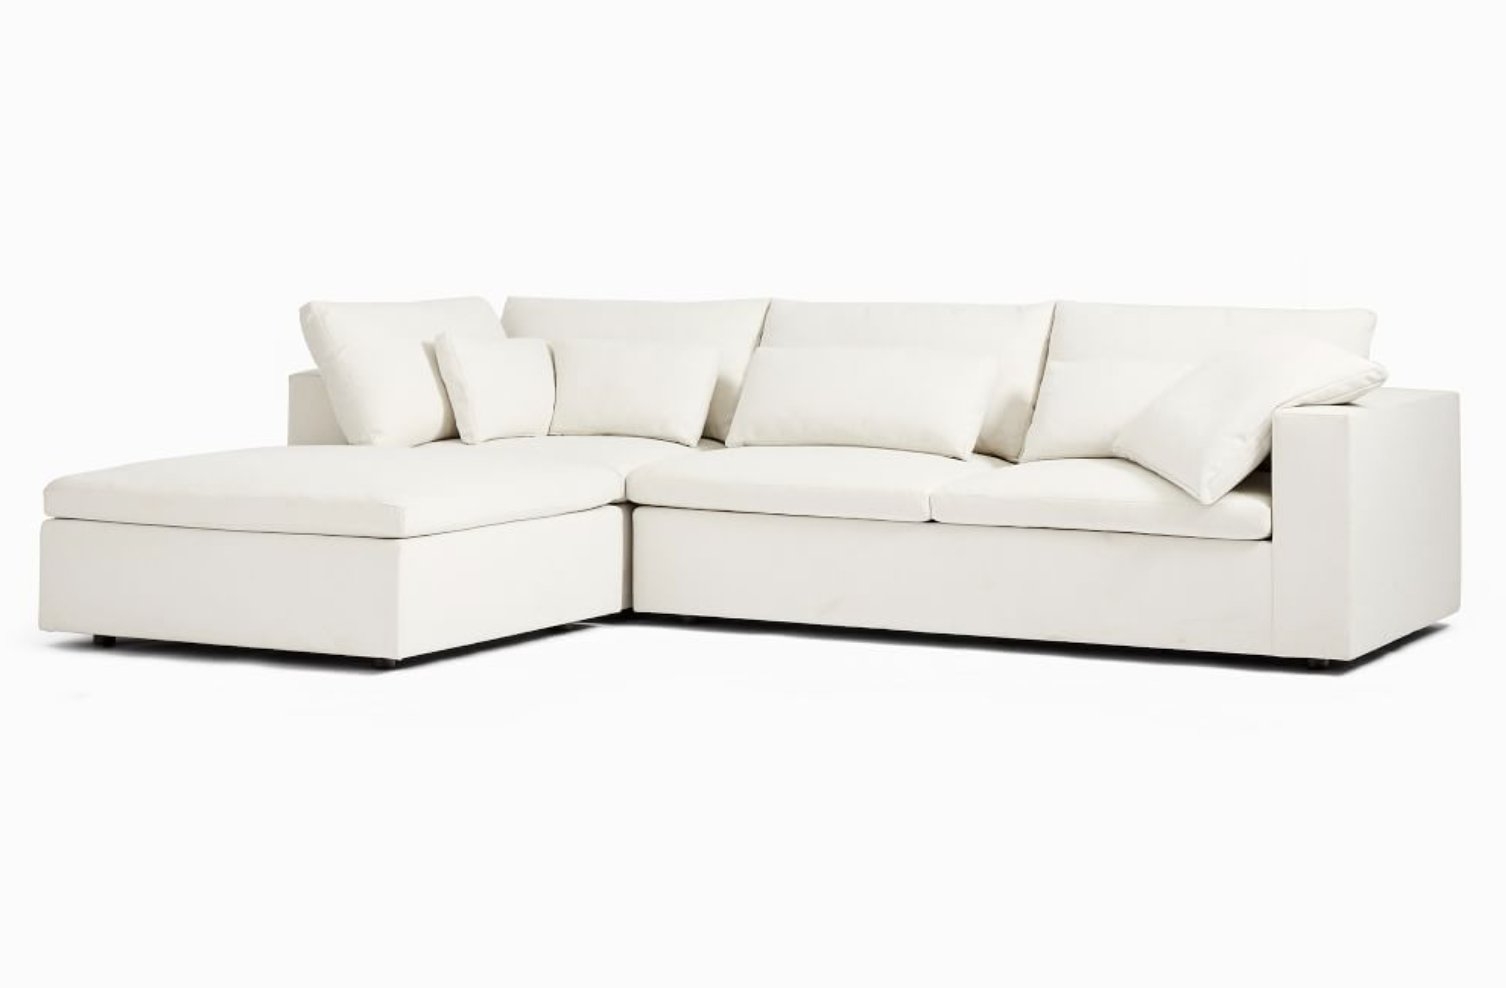 Harmony Modular 3-Piece Chaise Sectional - Right Arm Sofa, Corner, Ottoman, Alabaster, performance coastal linen - Image 0